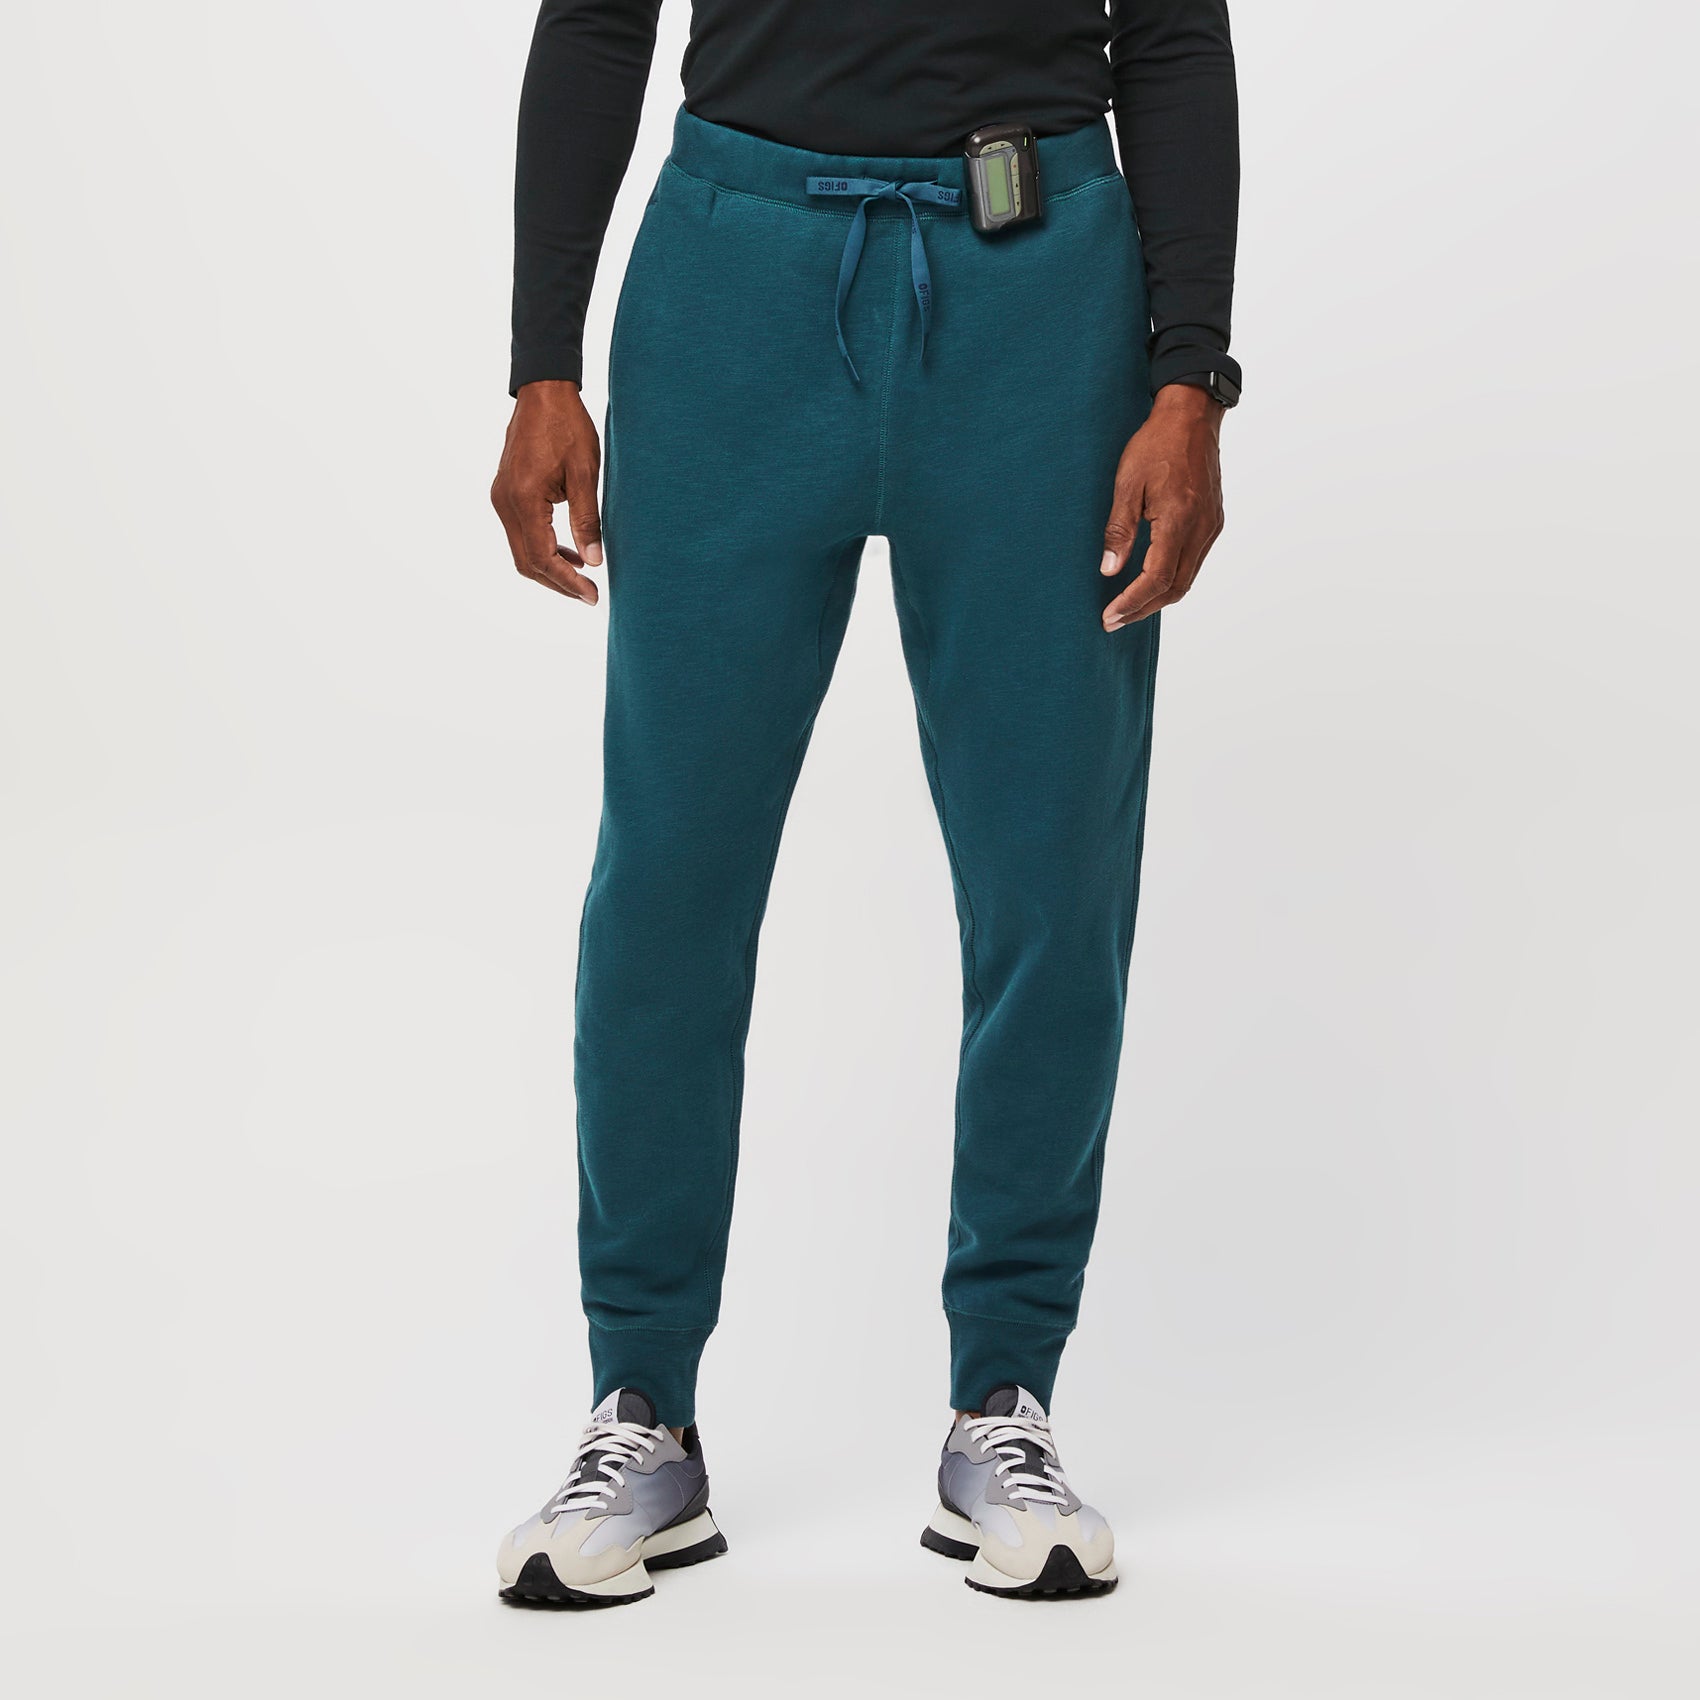 Pantalón deportivo relajado Off-Shift™ para mujer - Negro · FIGS